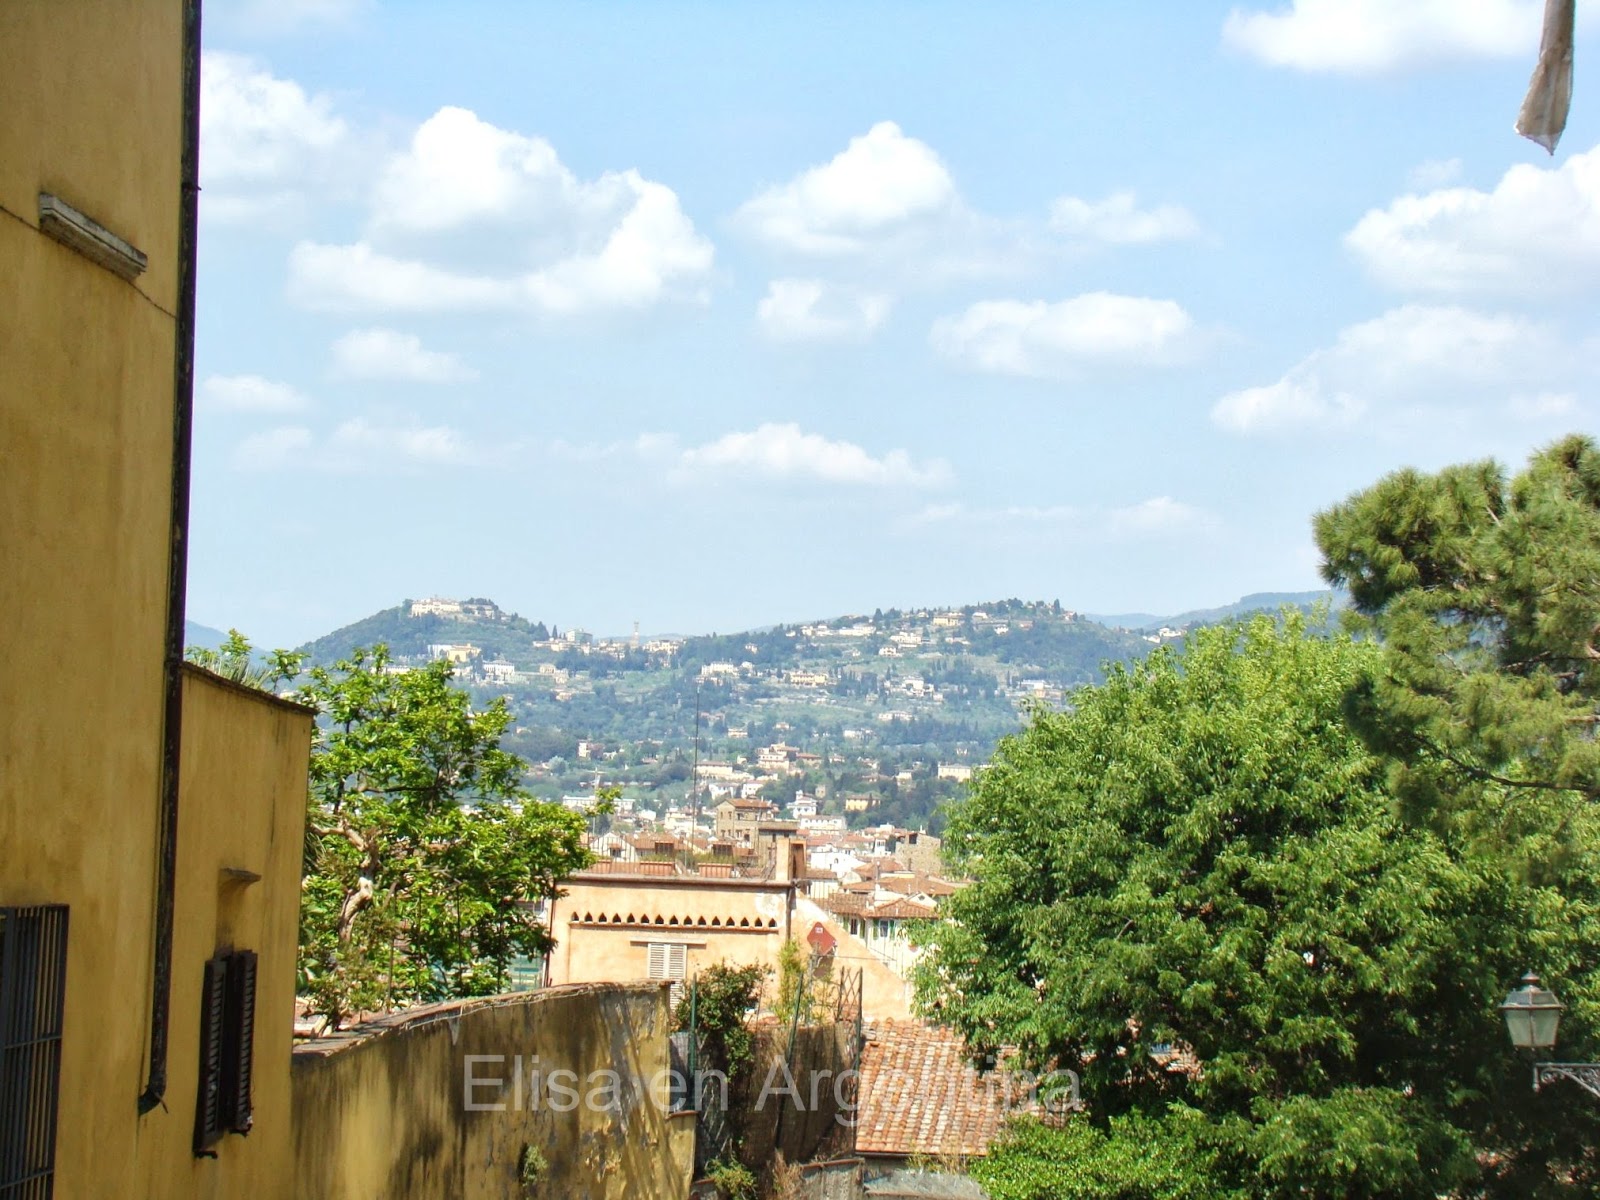 Visita al Oltrarno, Florencia, Firenze, Italia, Elisa N, Blog de Viajes, Lifestyle, Travel